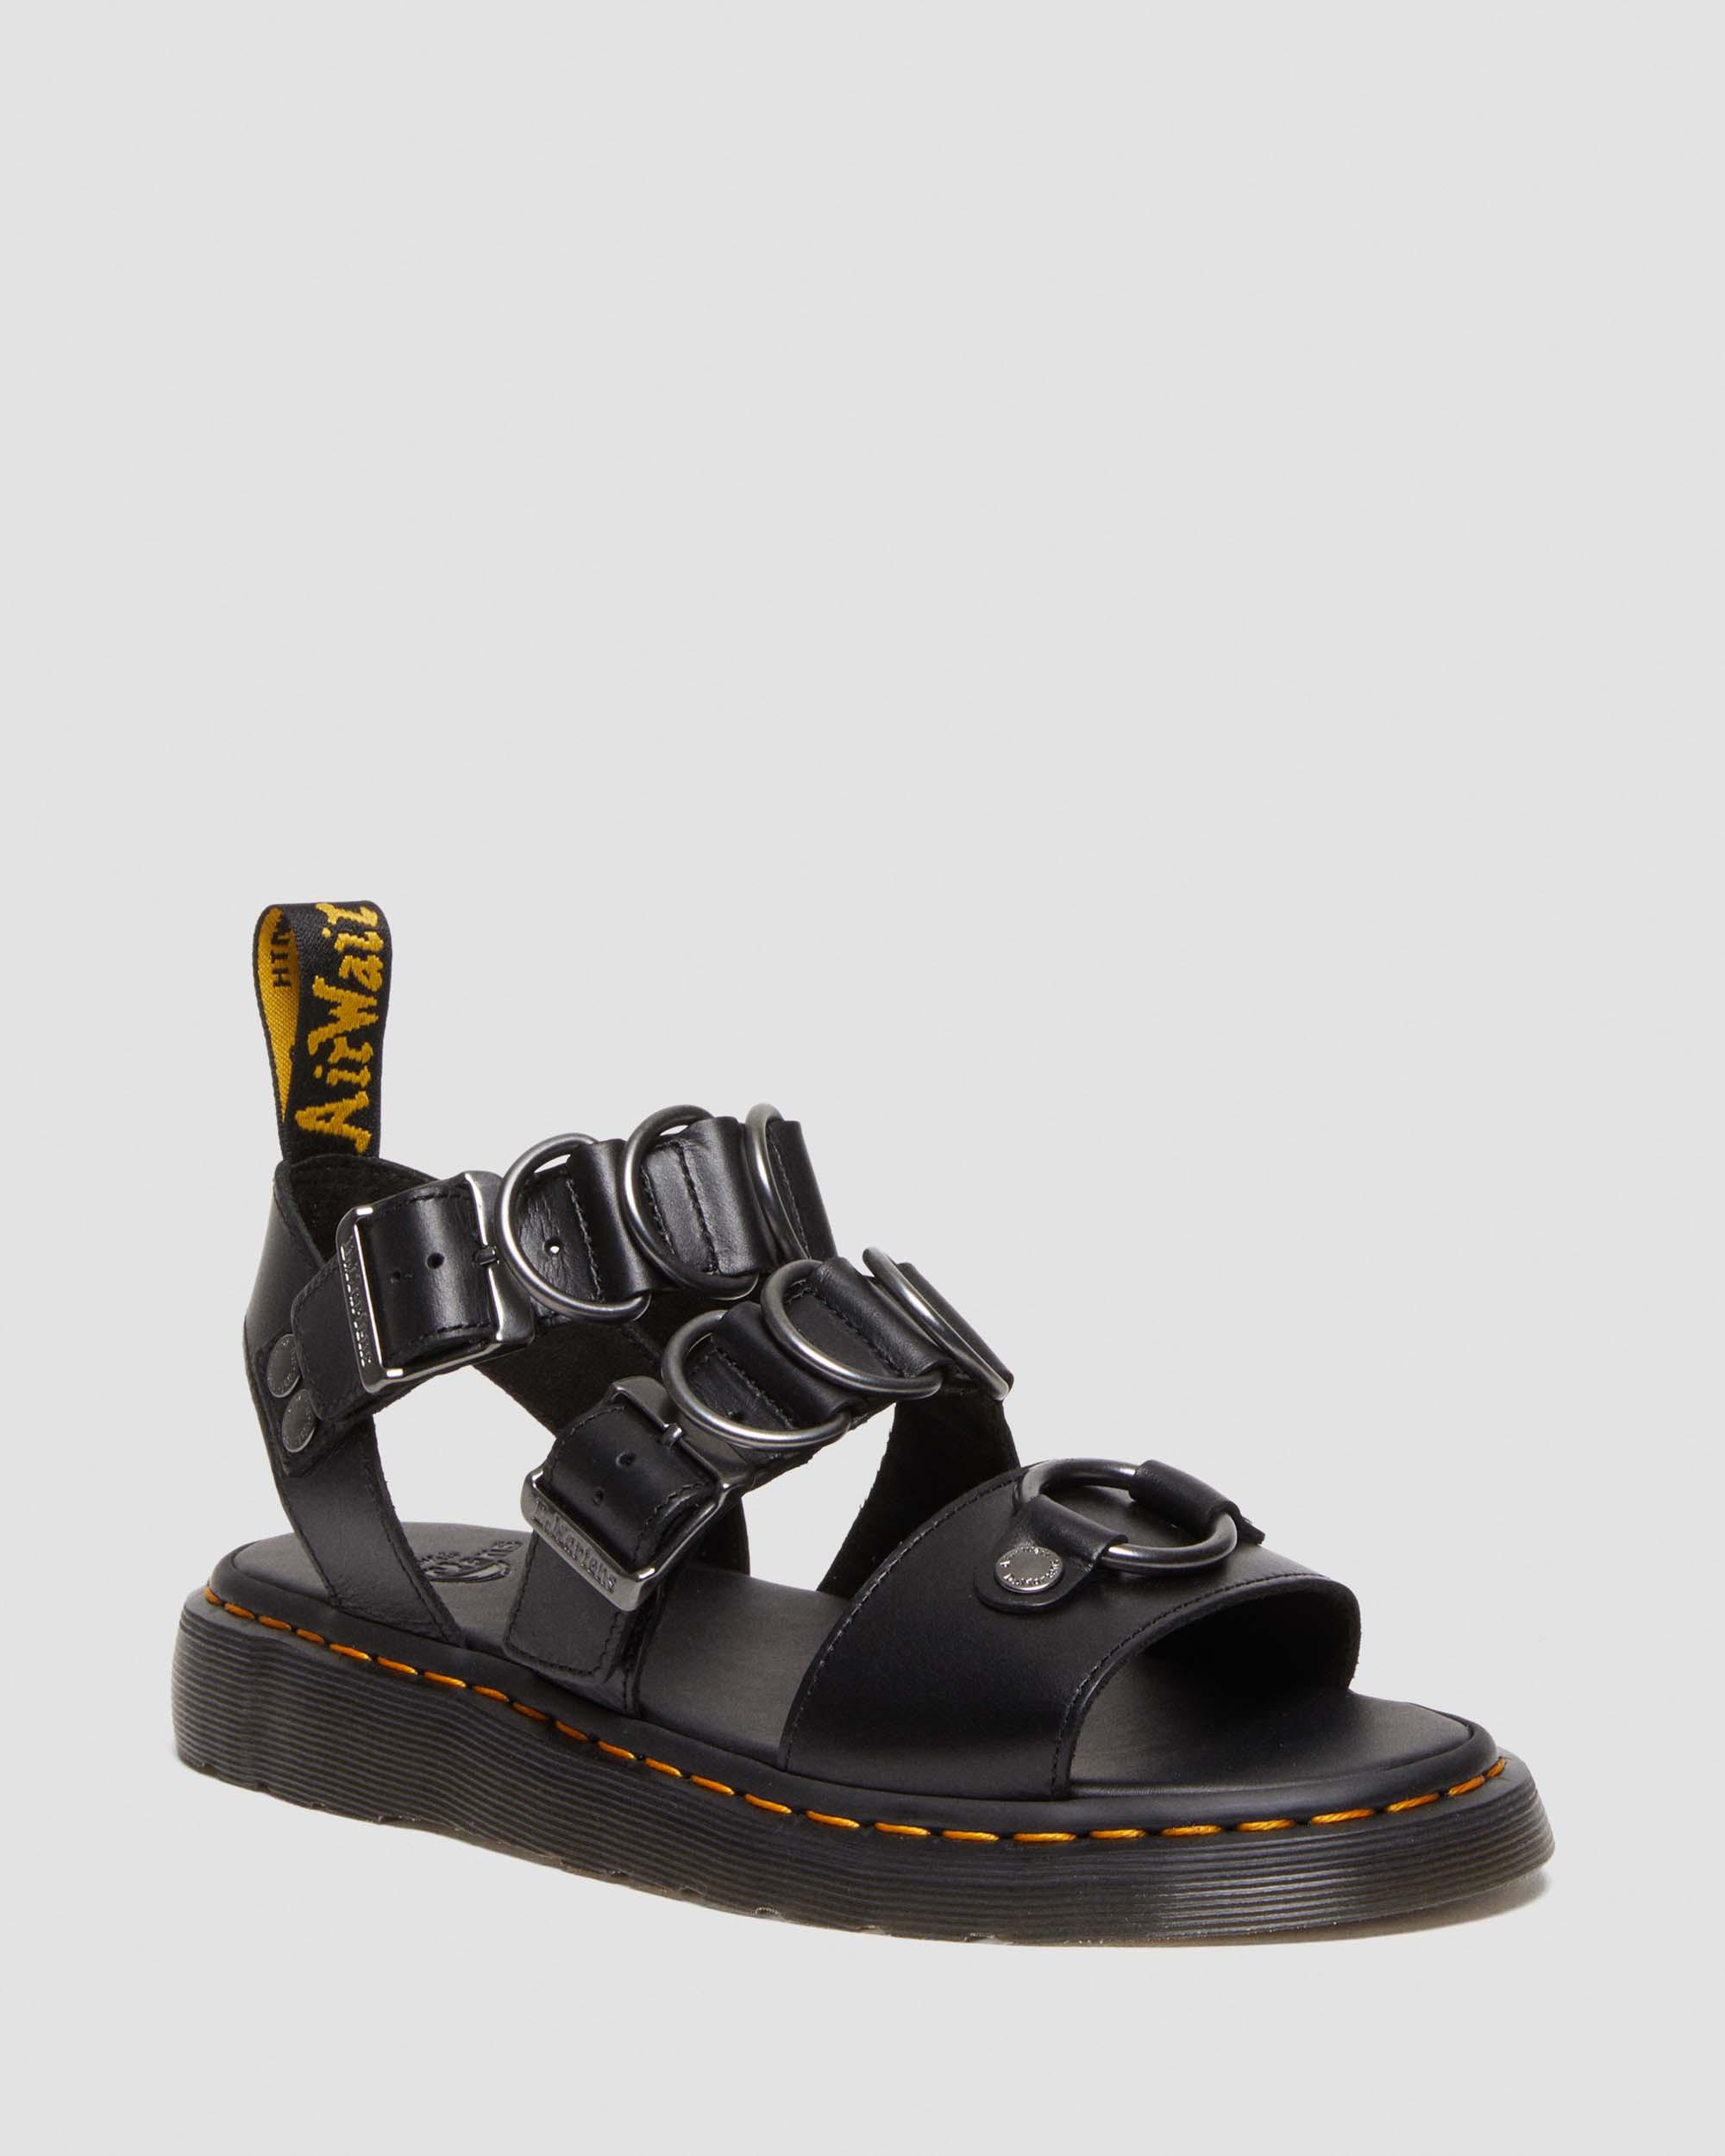 Gryphon Alternative Brando Leather Strap Sandals in Black | Dr 